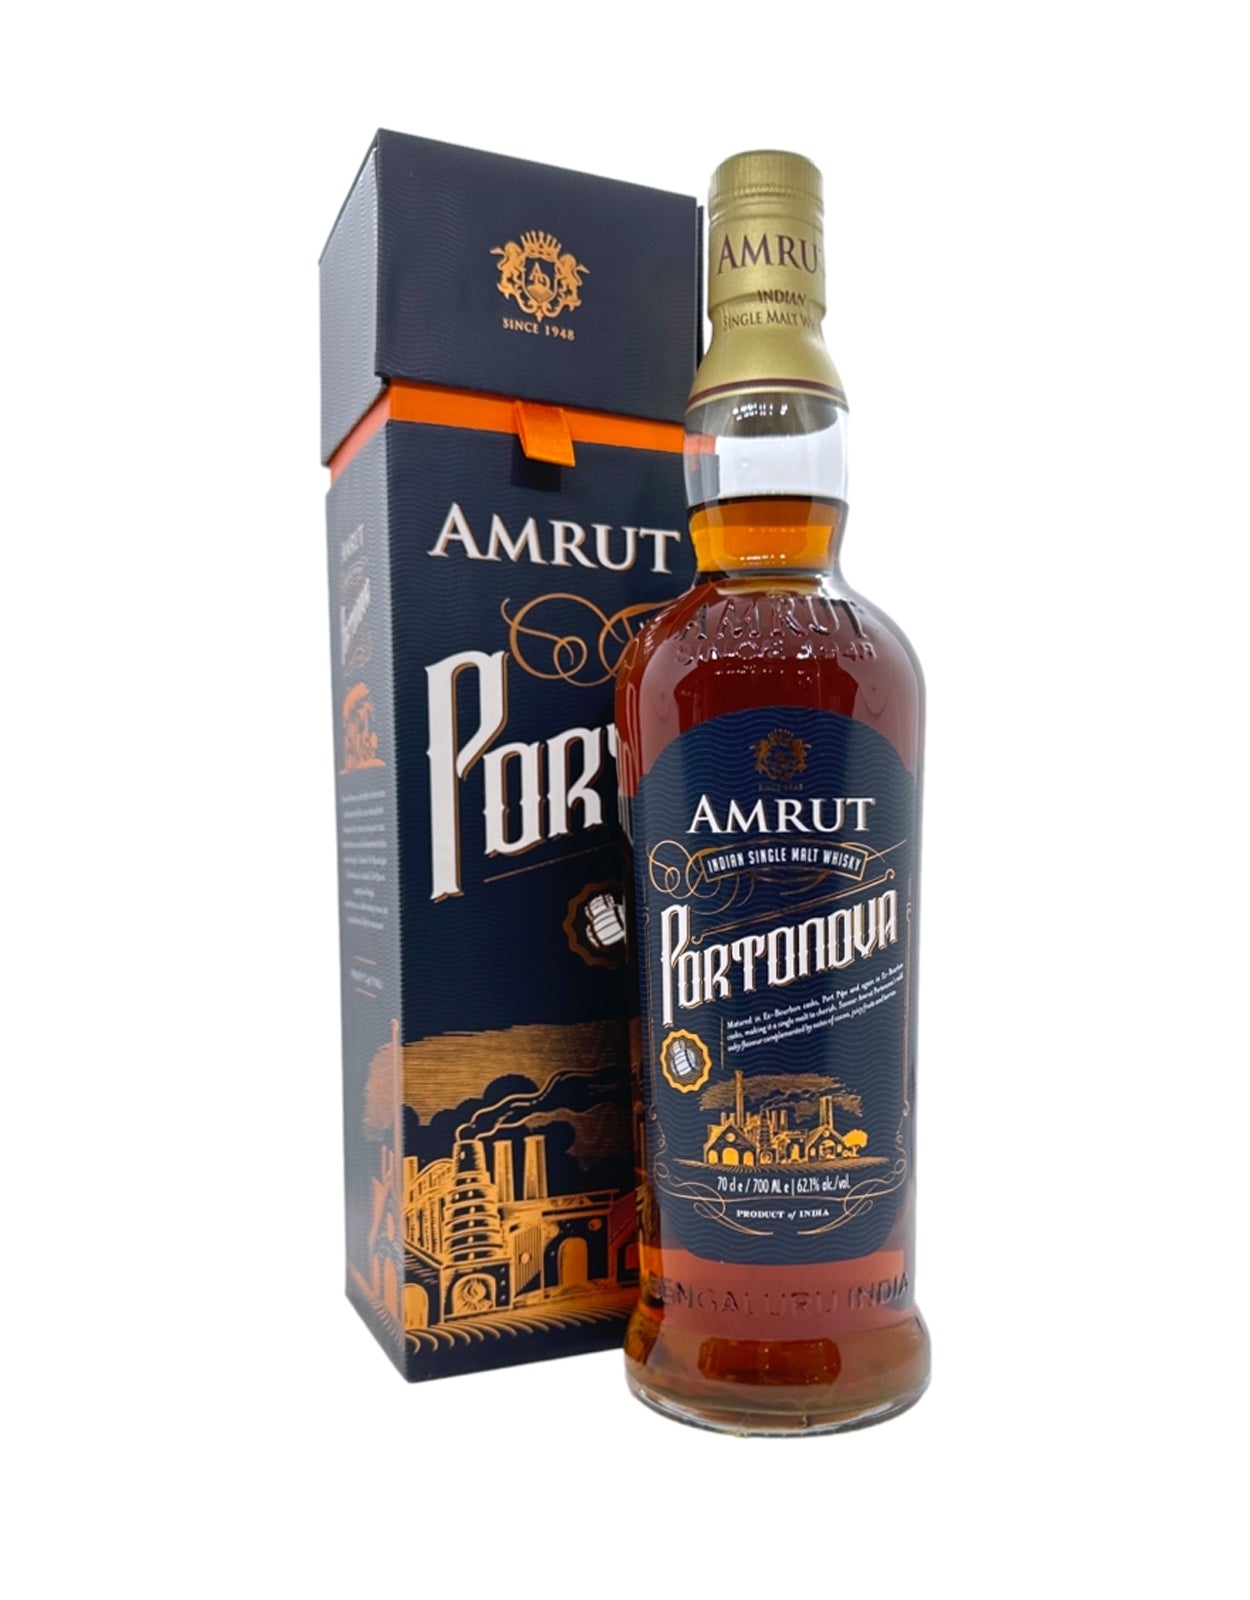 Amrut Portonova Cask Strength Indian Single Malt Whisky